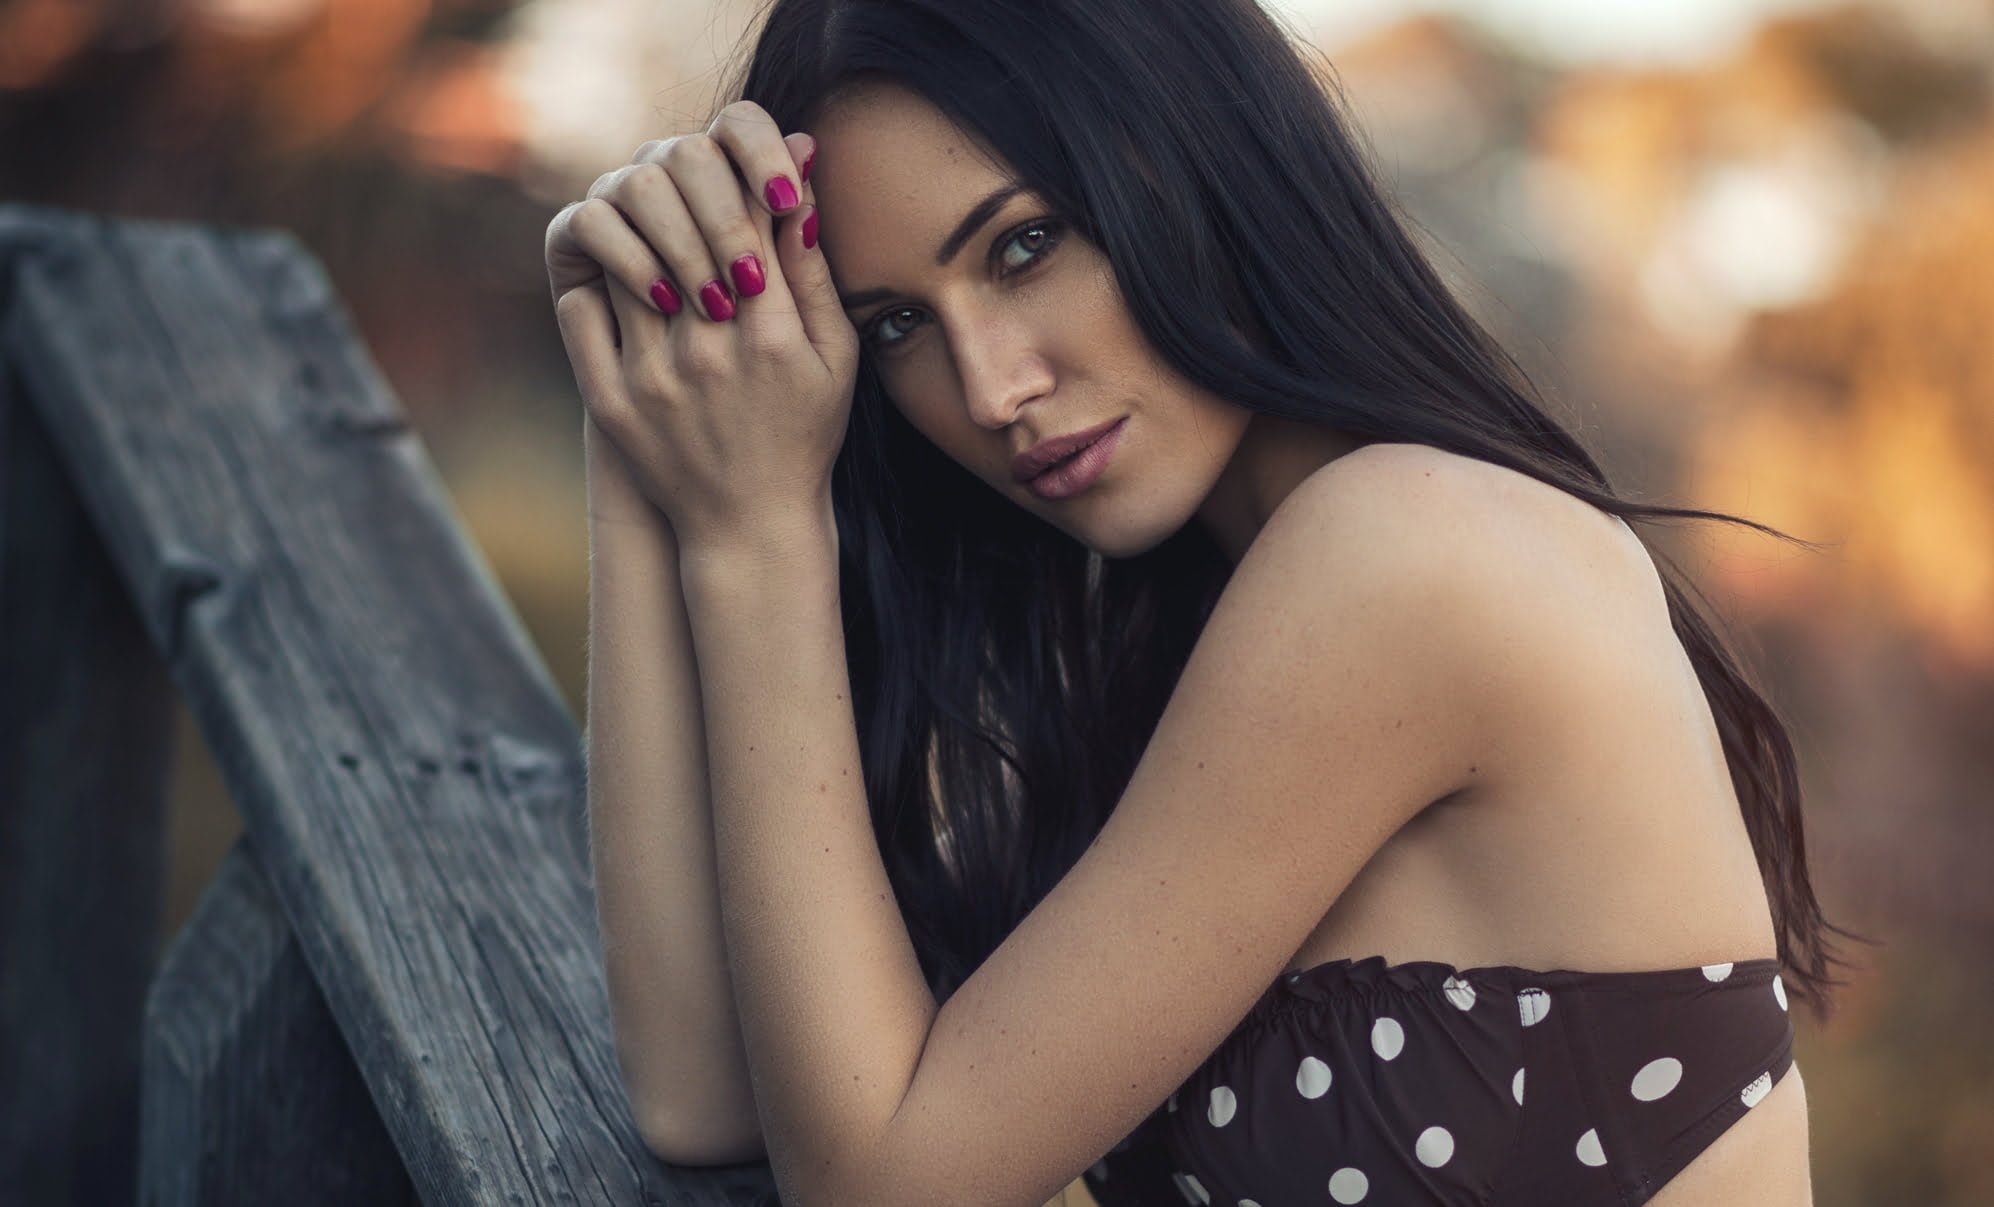 Model & musician Polina Grace debuts single 